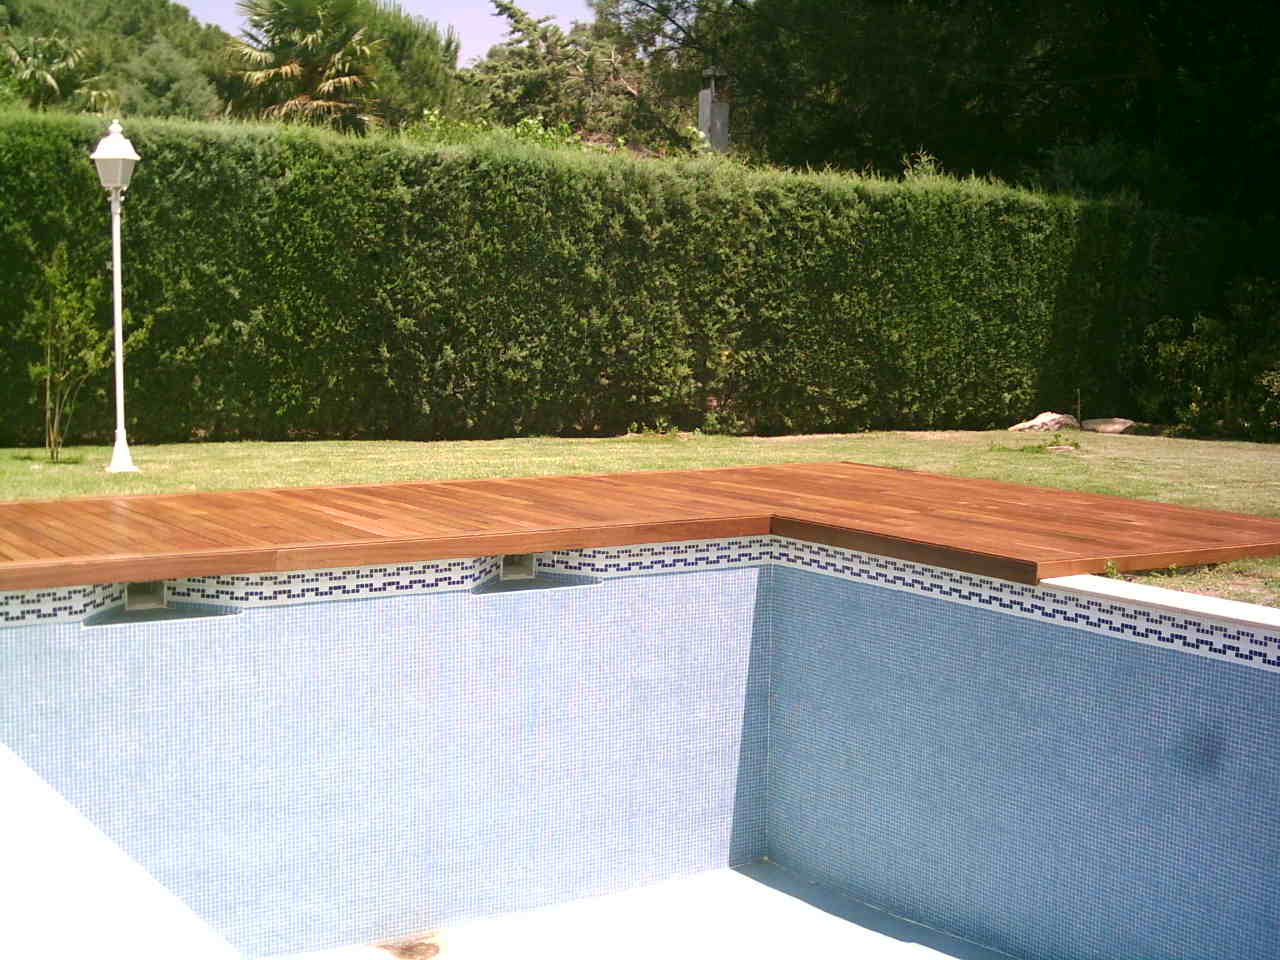 https://topmadera.com/wp-content/uploads/Instalacion-en-piscina-de-tarima-de-cumaru-exterior-en-Valdemorillo.jpg